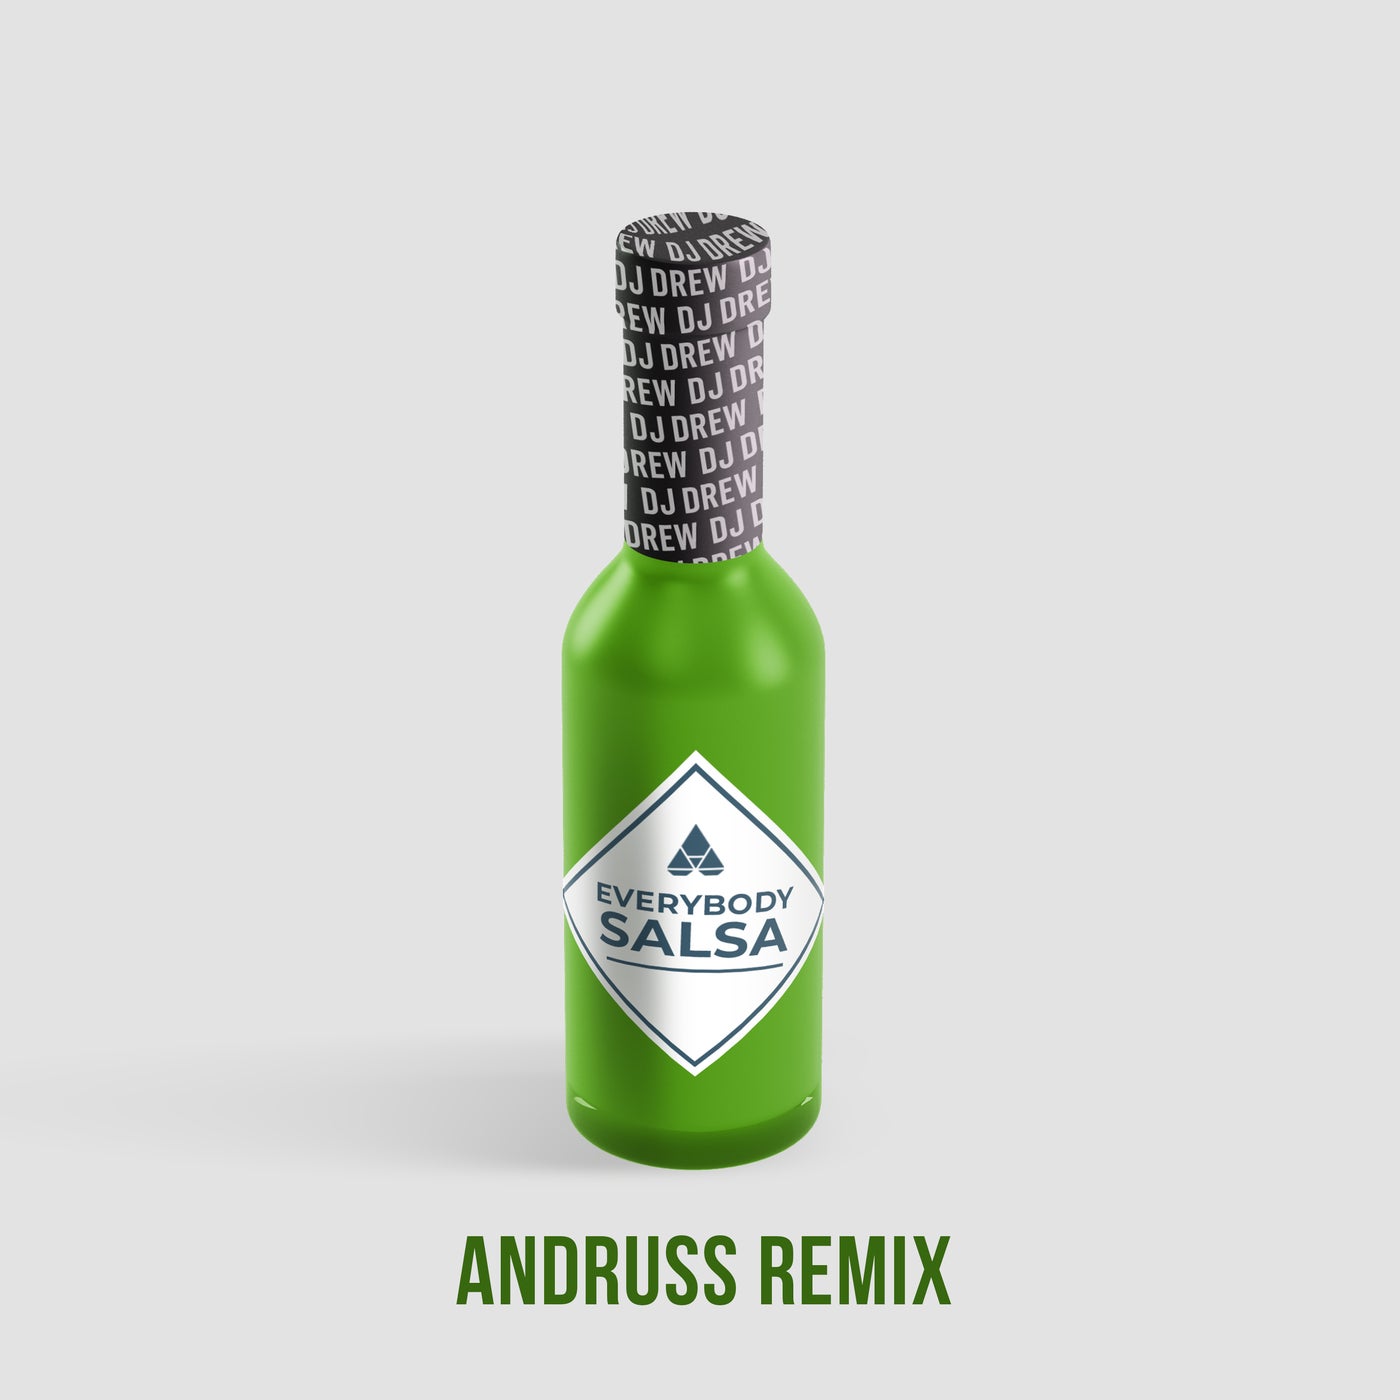 DJ Drew - Everybody Salsa (Andruss Remix) on Liftoff Recordings